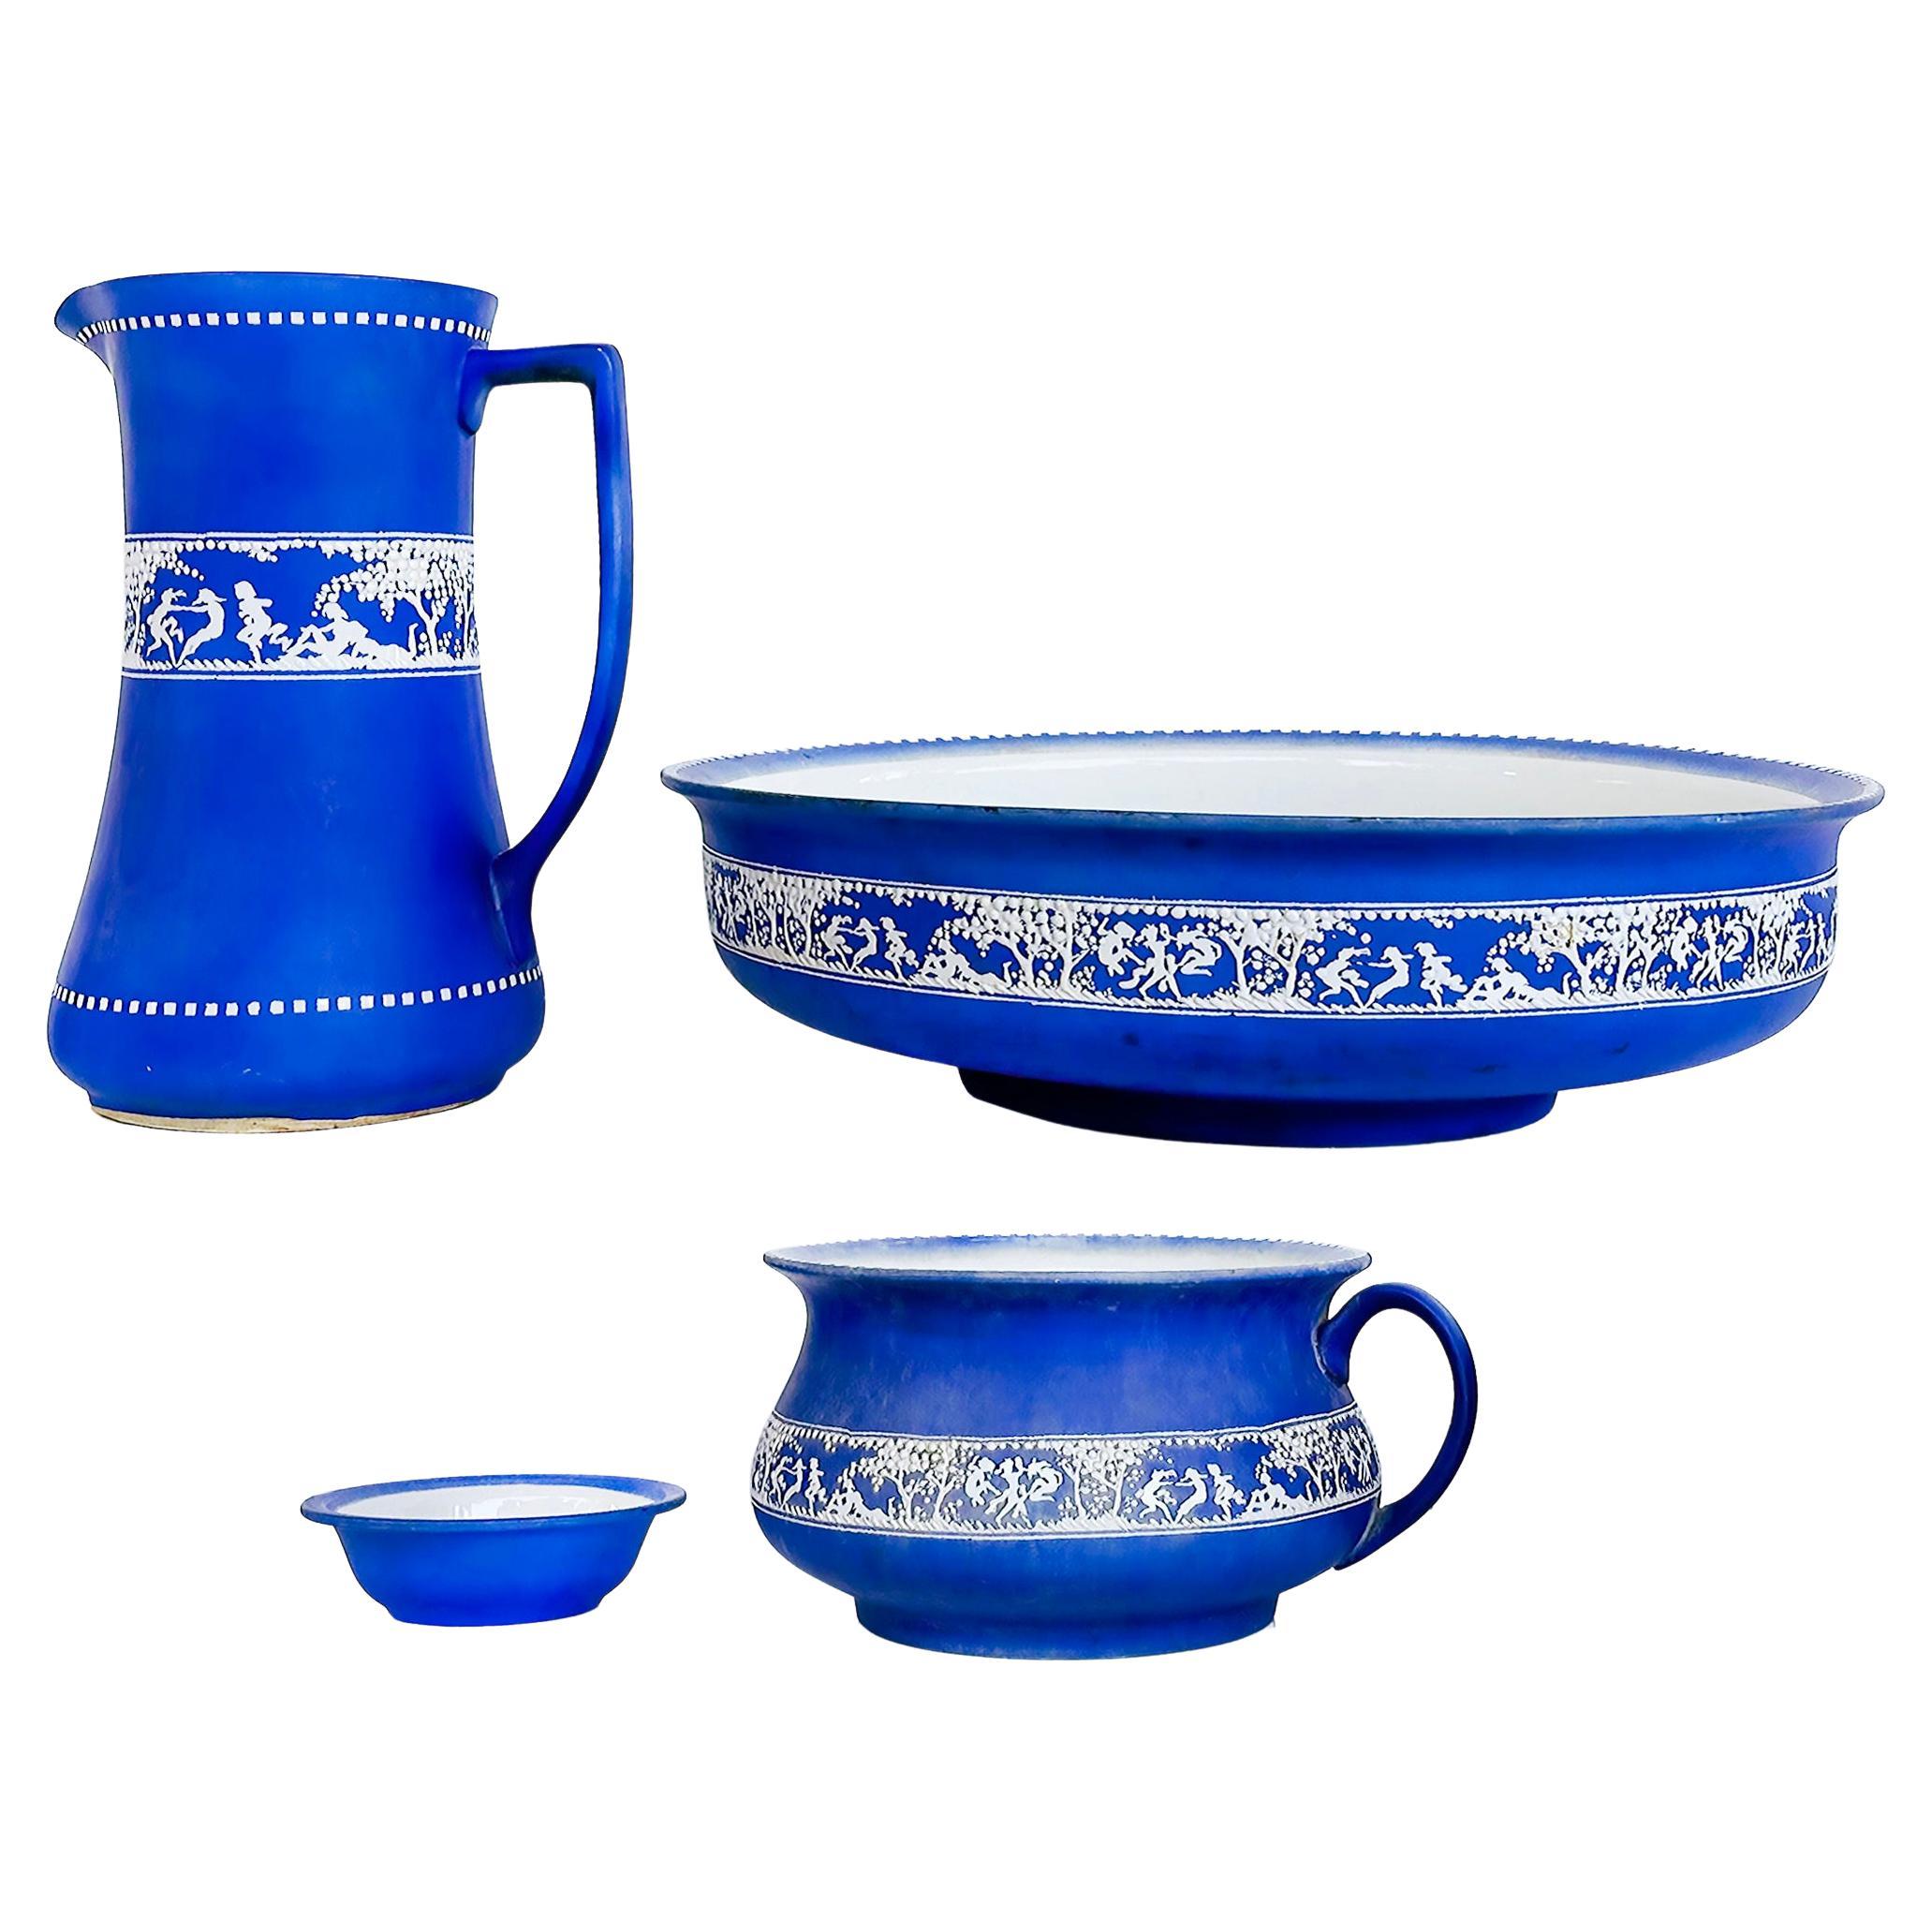 "Tams" Ware Jasperware Bowl Pitcher Set John Tams Ltd., England, Blue and White For Sale